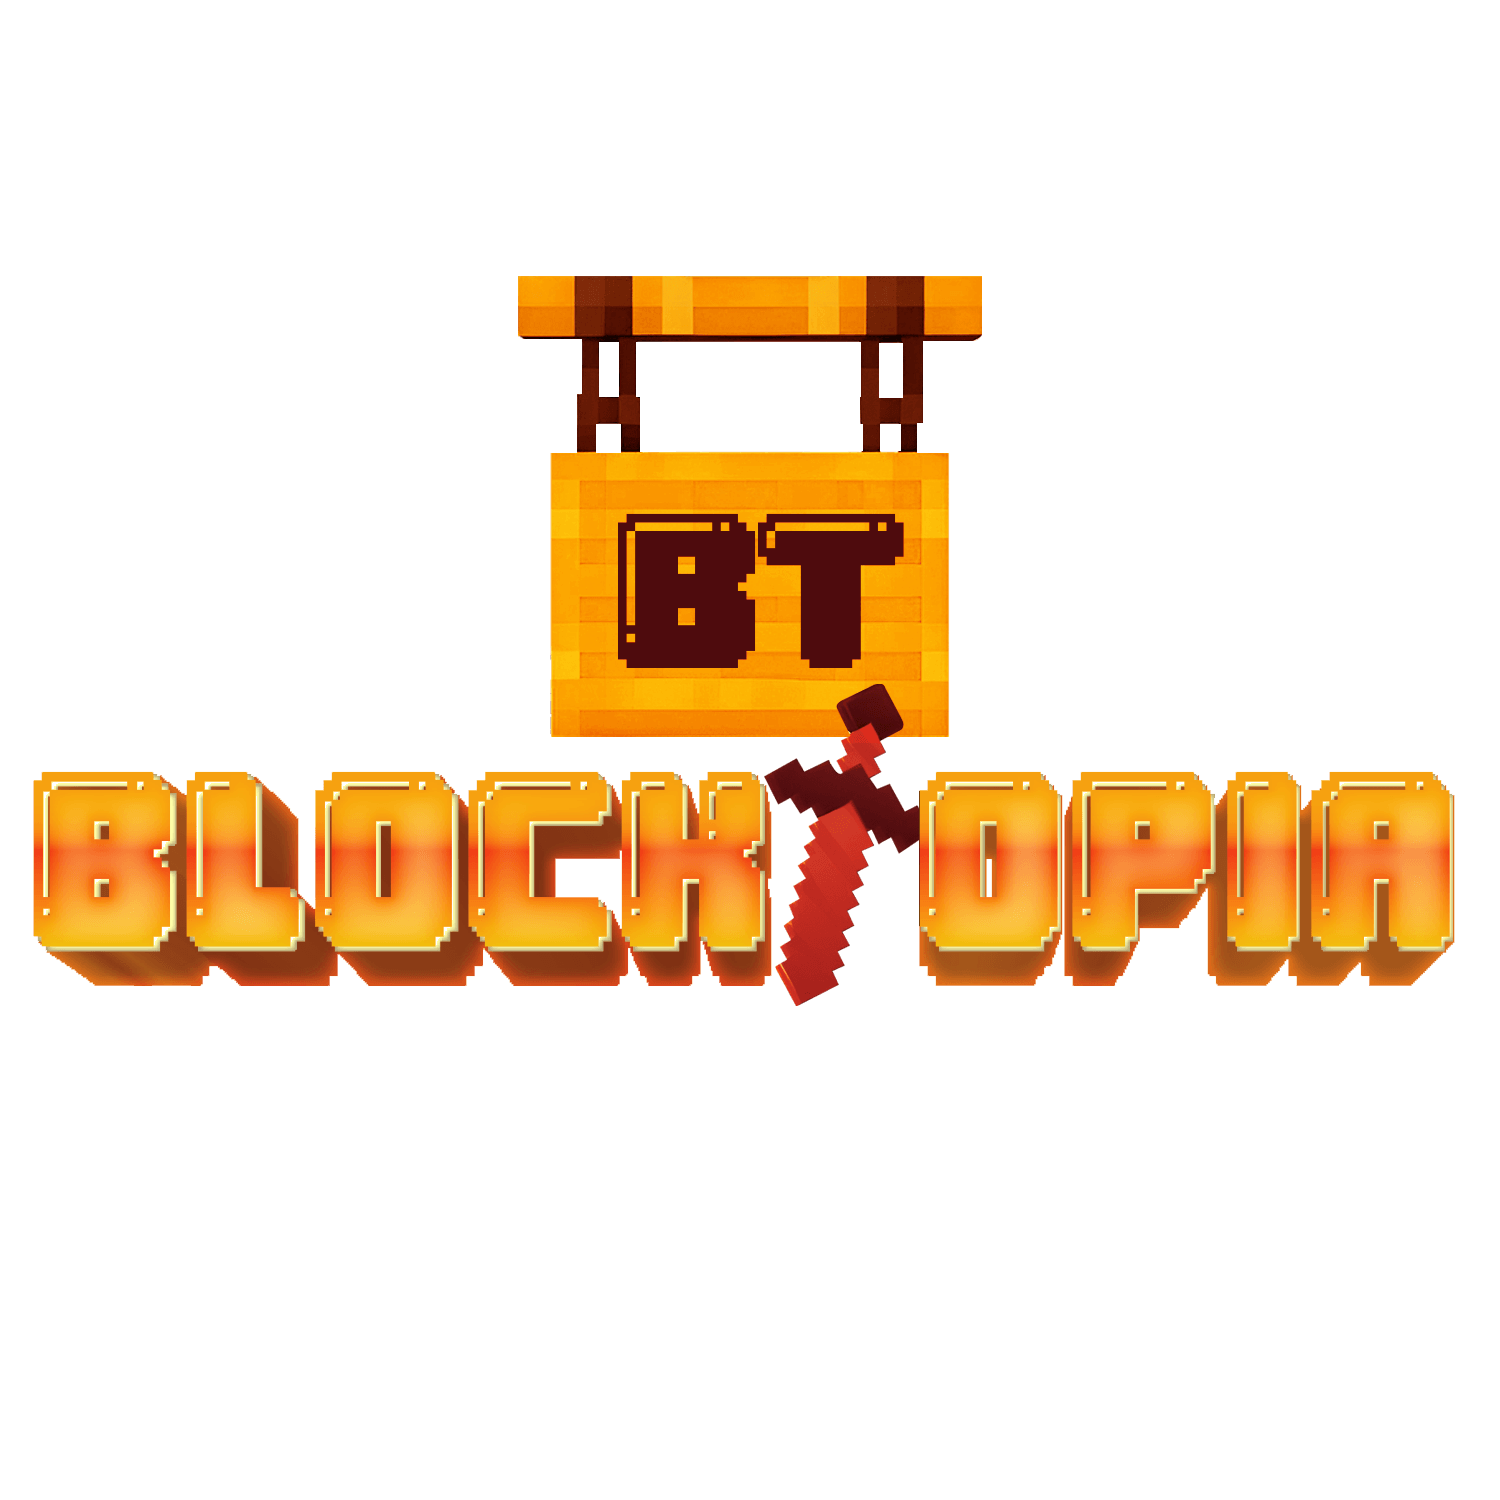 BlockTopia